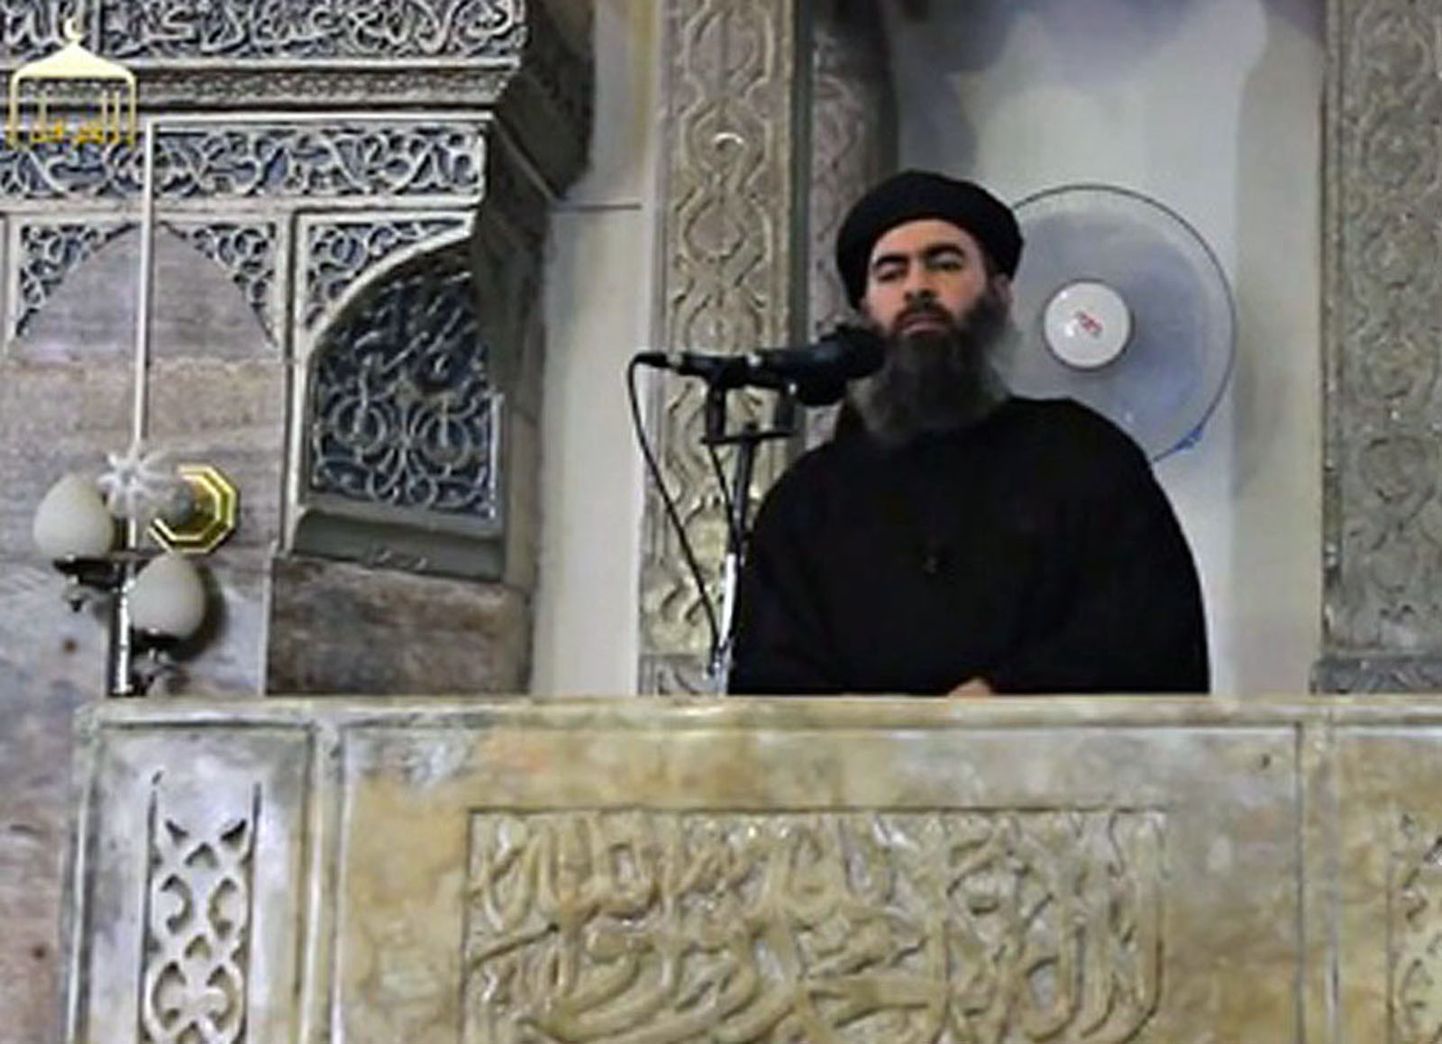 ISISe liider Abu Bakr al-Baghdadi.